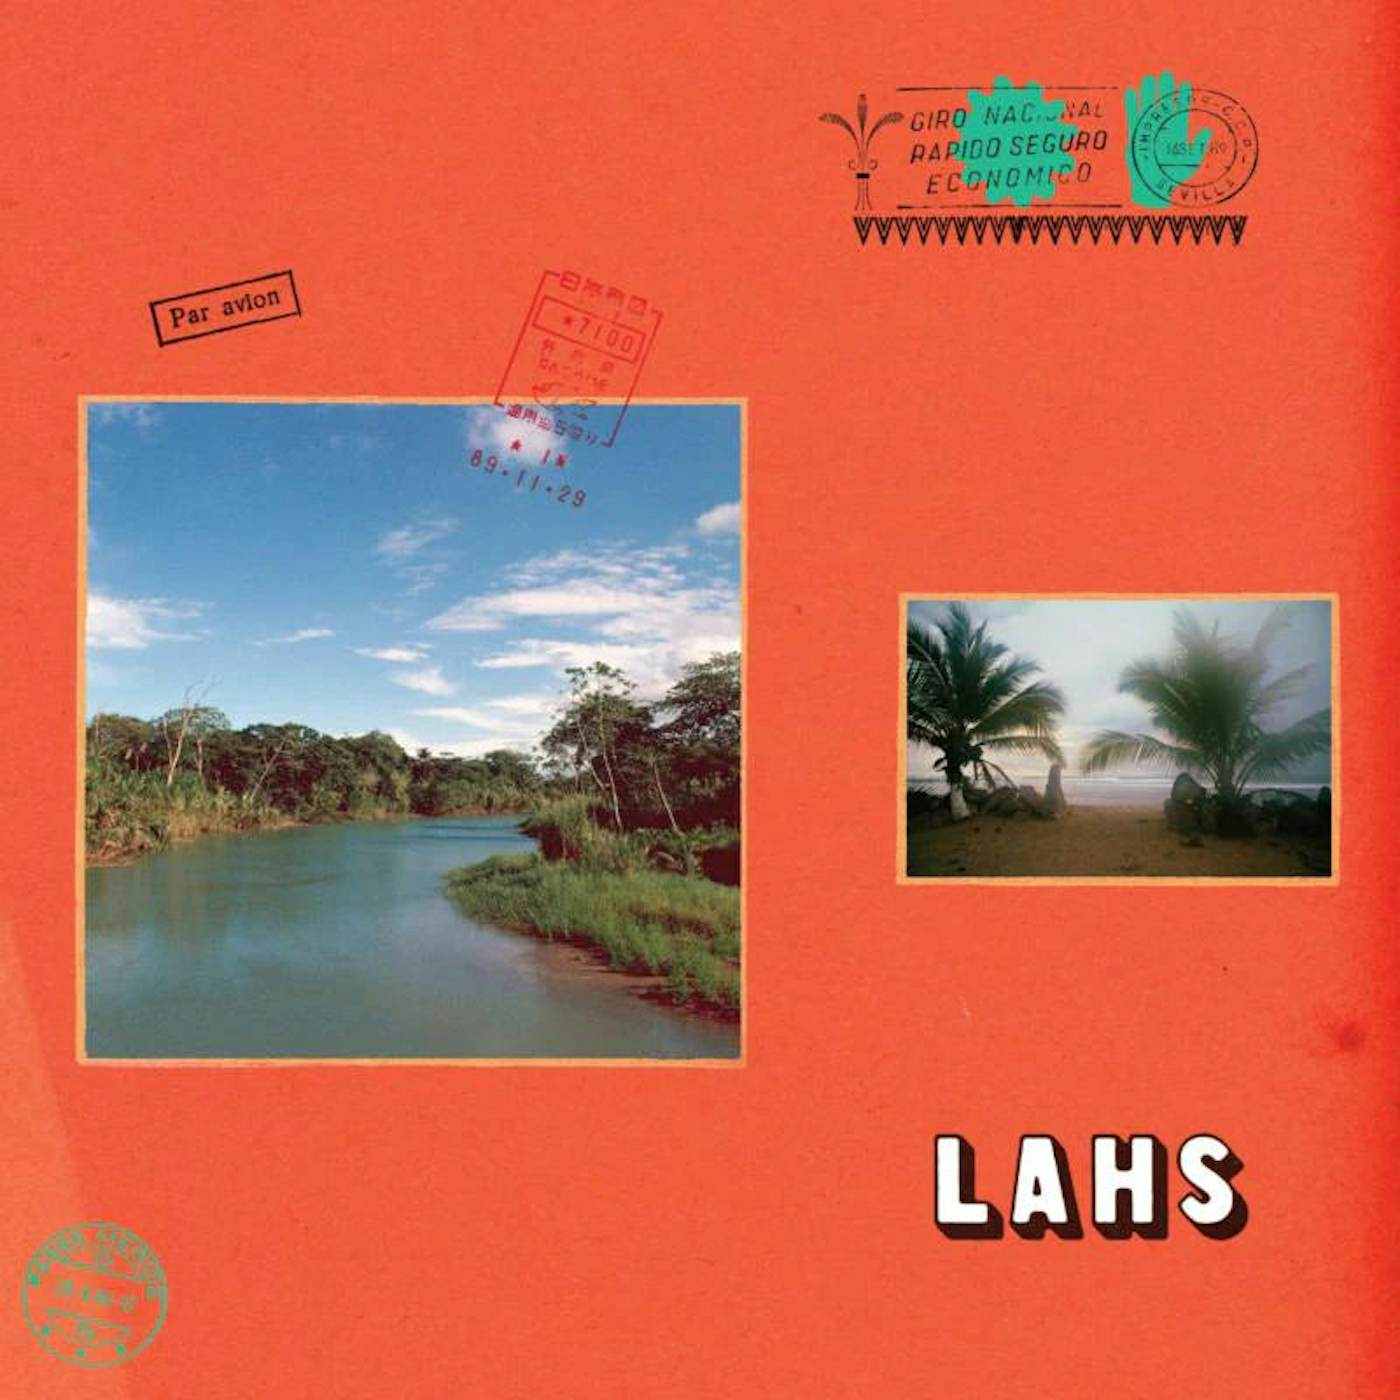 Allah-Las LP - Lahs (Vinyl)